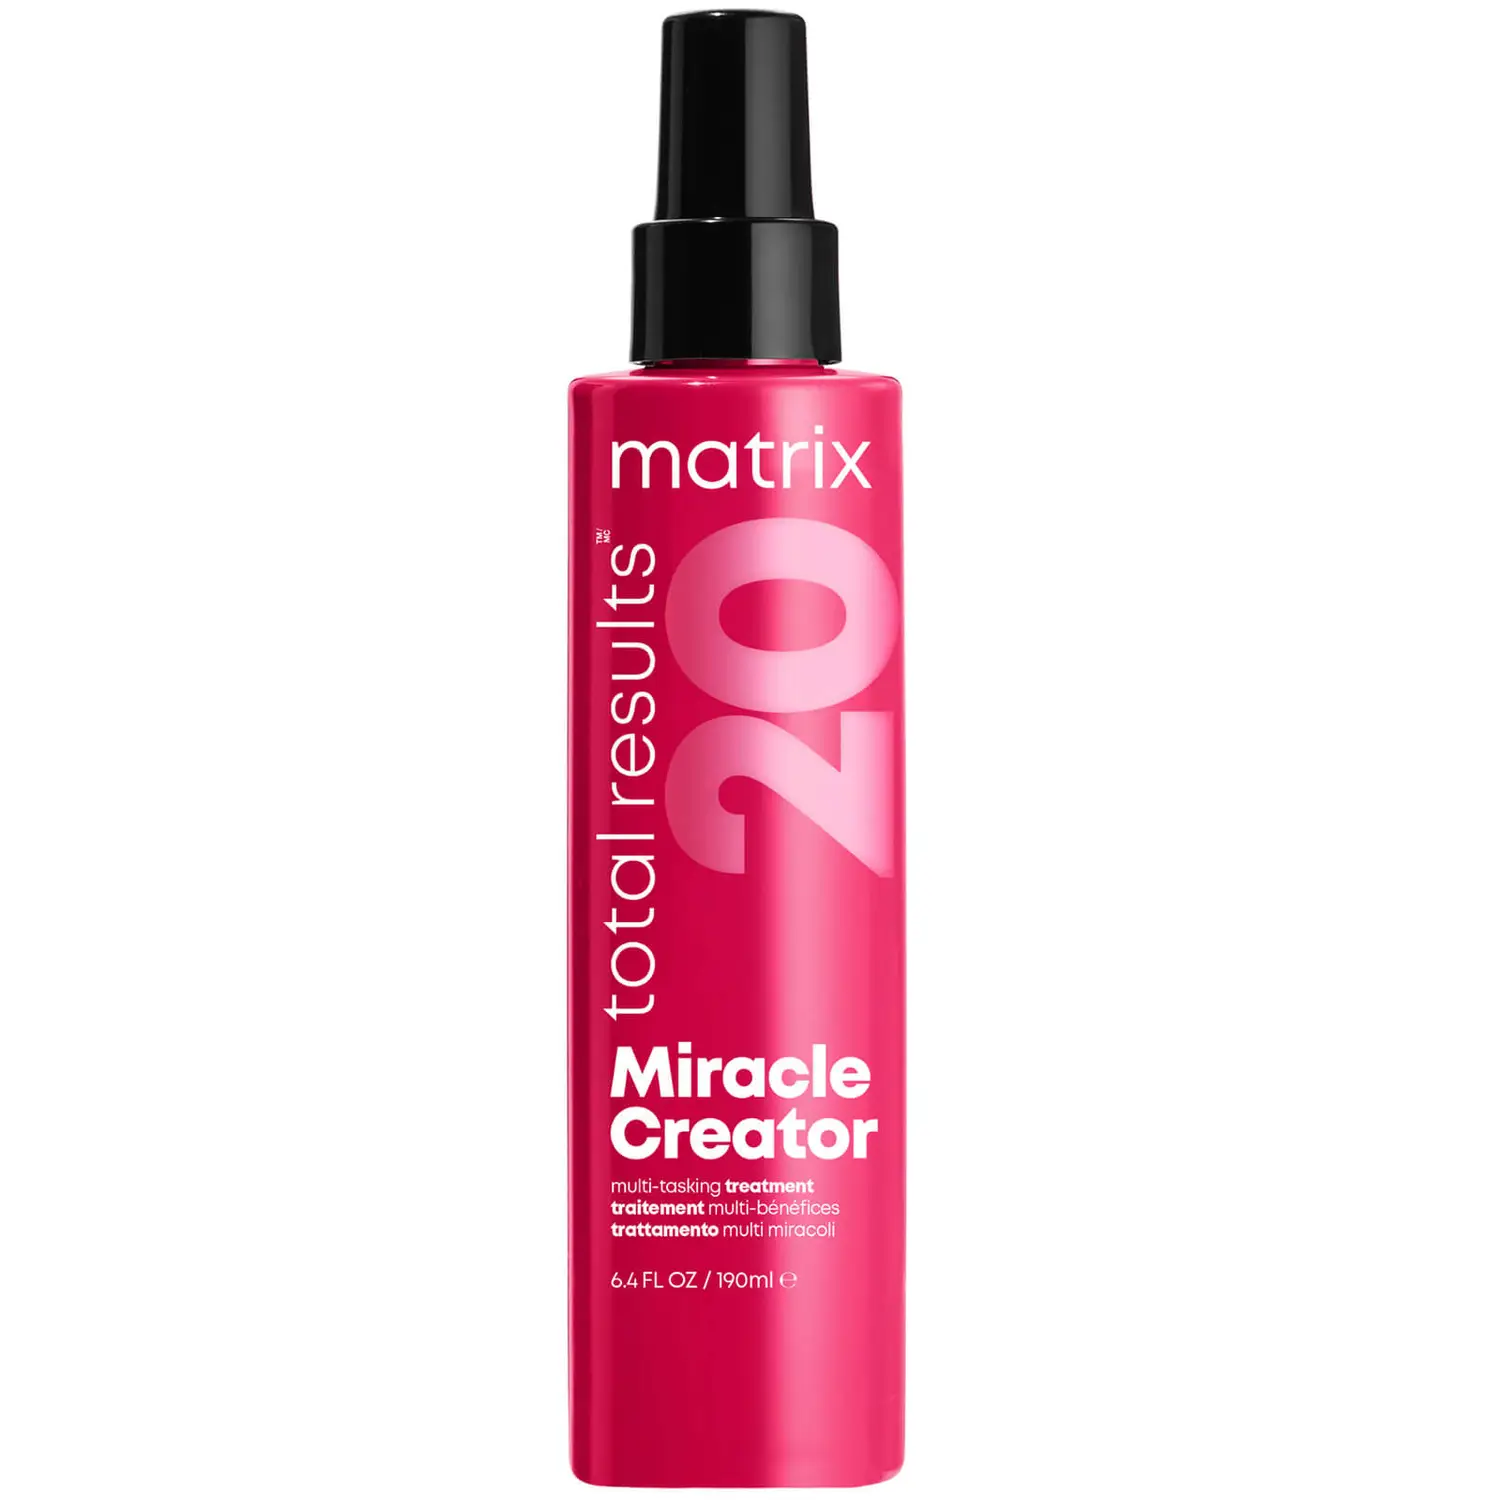 Matrix Total Results Miracle Creator Multi- Tasking 20 Benefits Treatment Spray €11.45